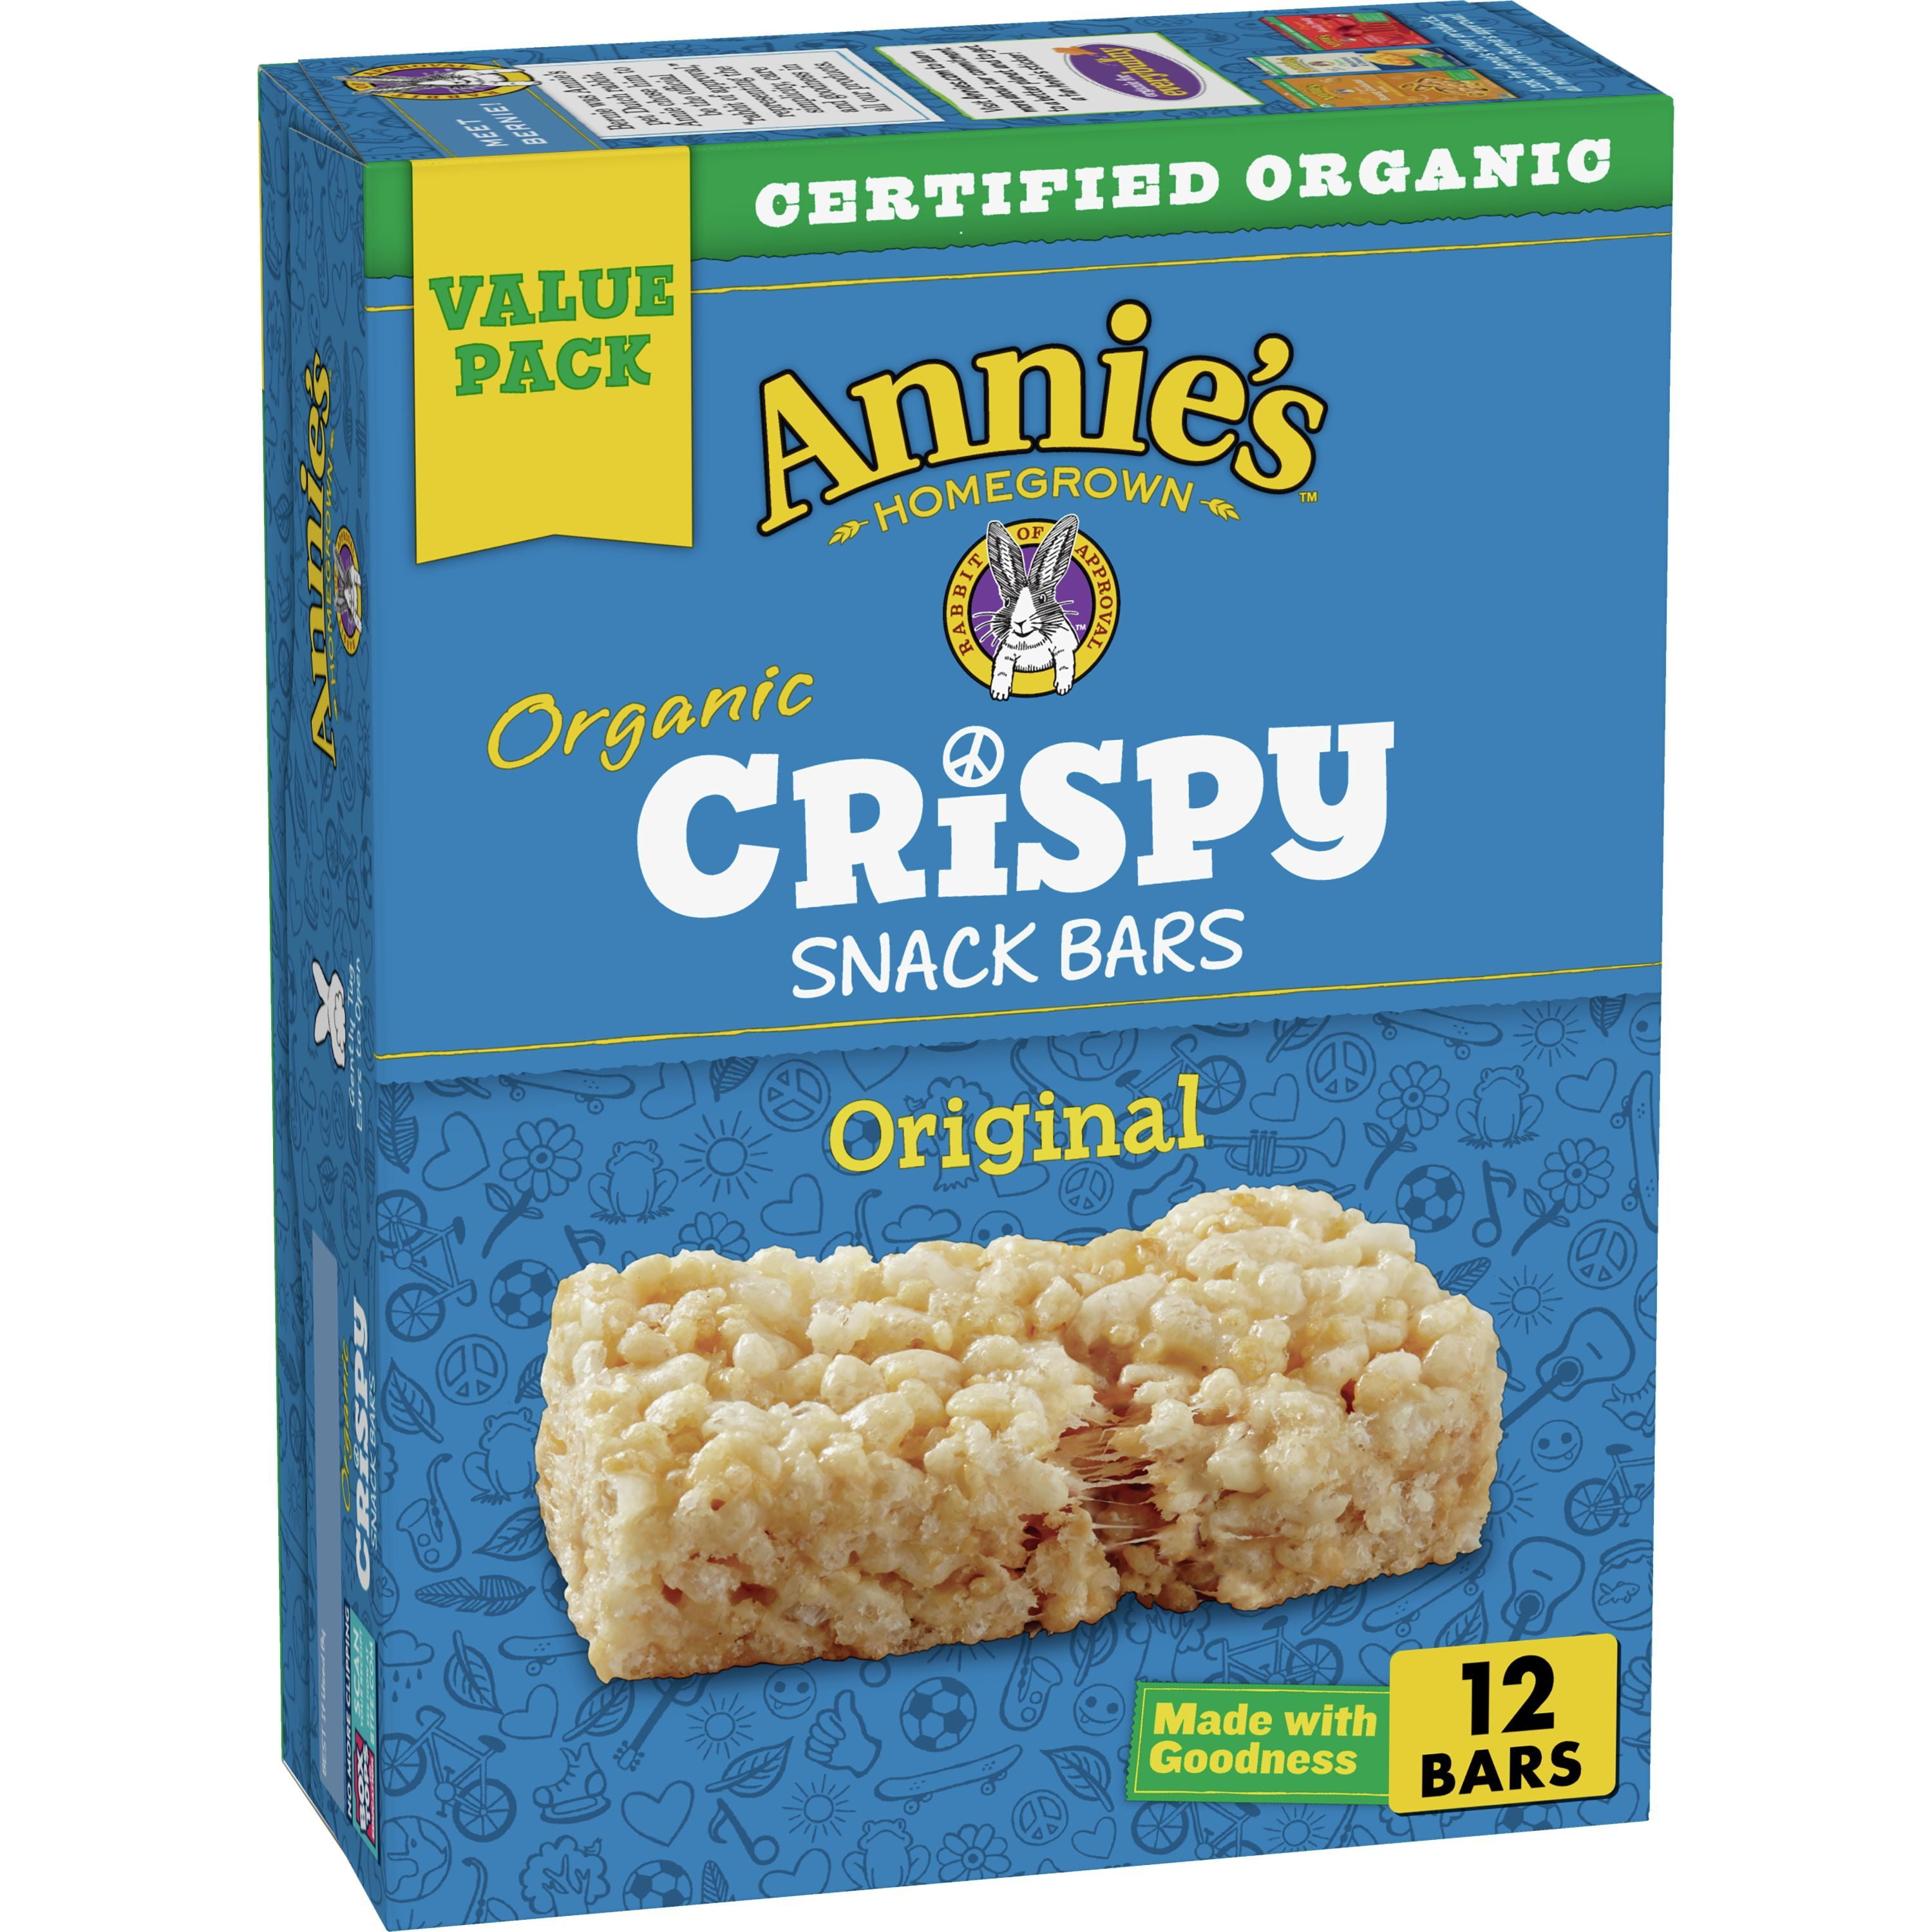 Annie's Organic Original Crispy Snack Bars, Gluten Free, Value Pack, 12 Bars, 9.36 oz.